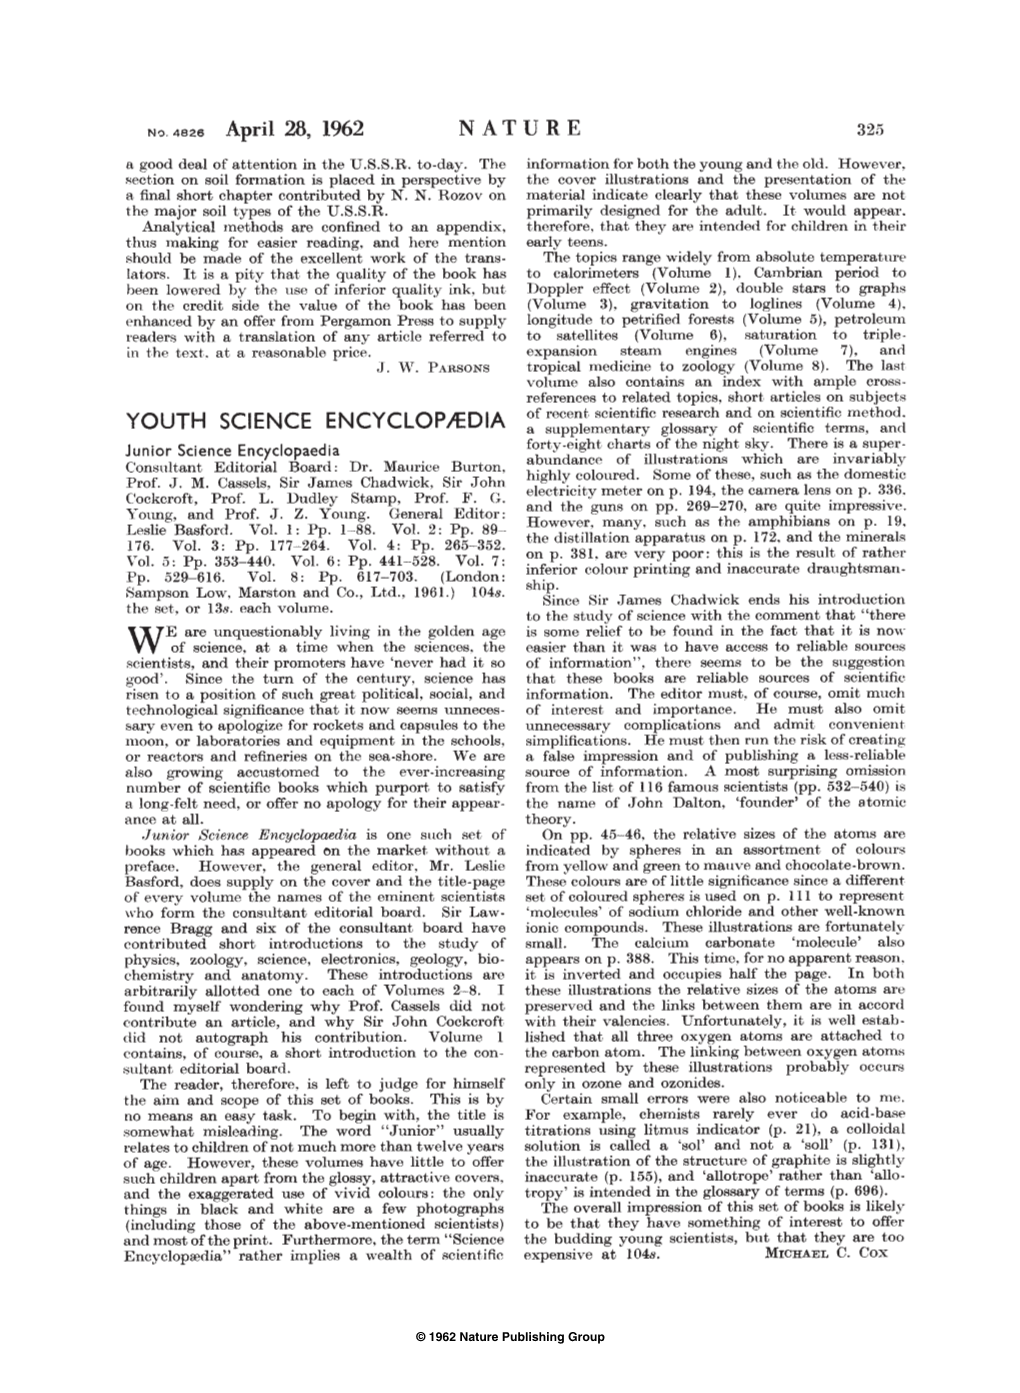 Youth Science Encyclopædia